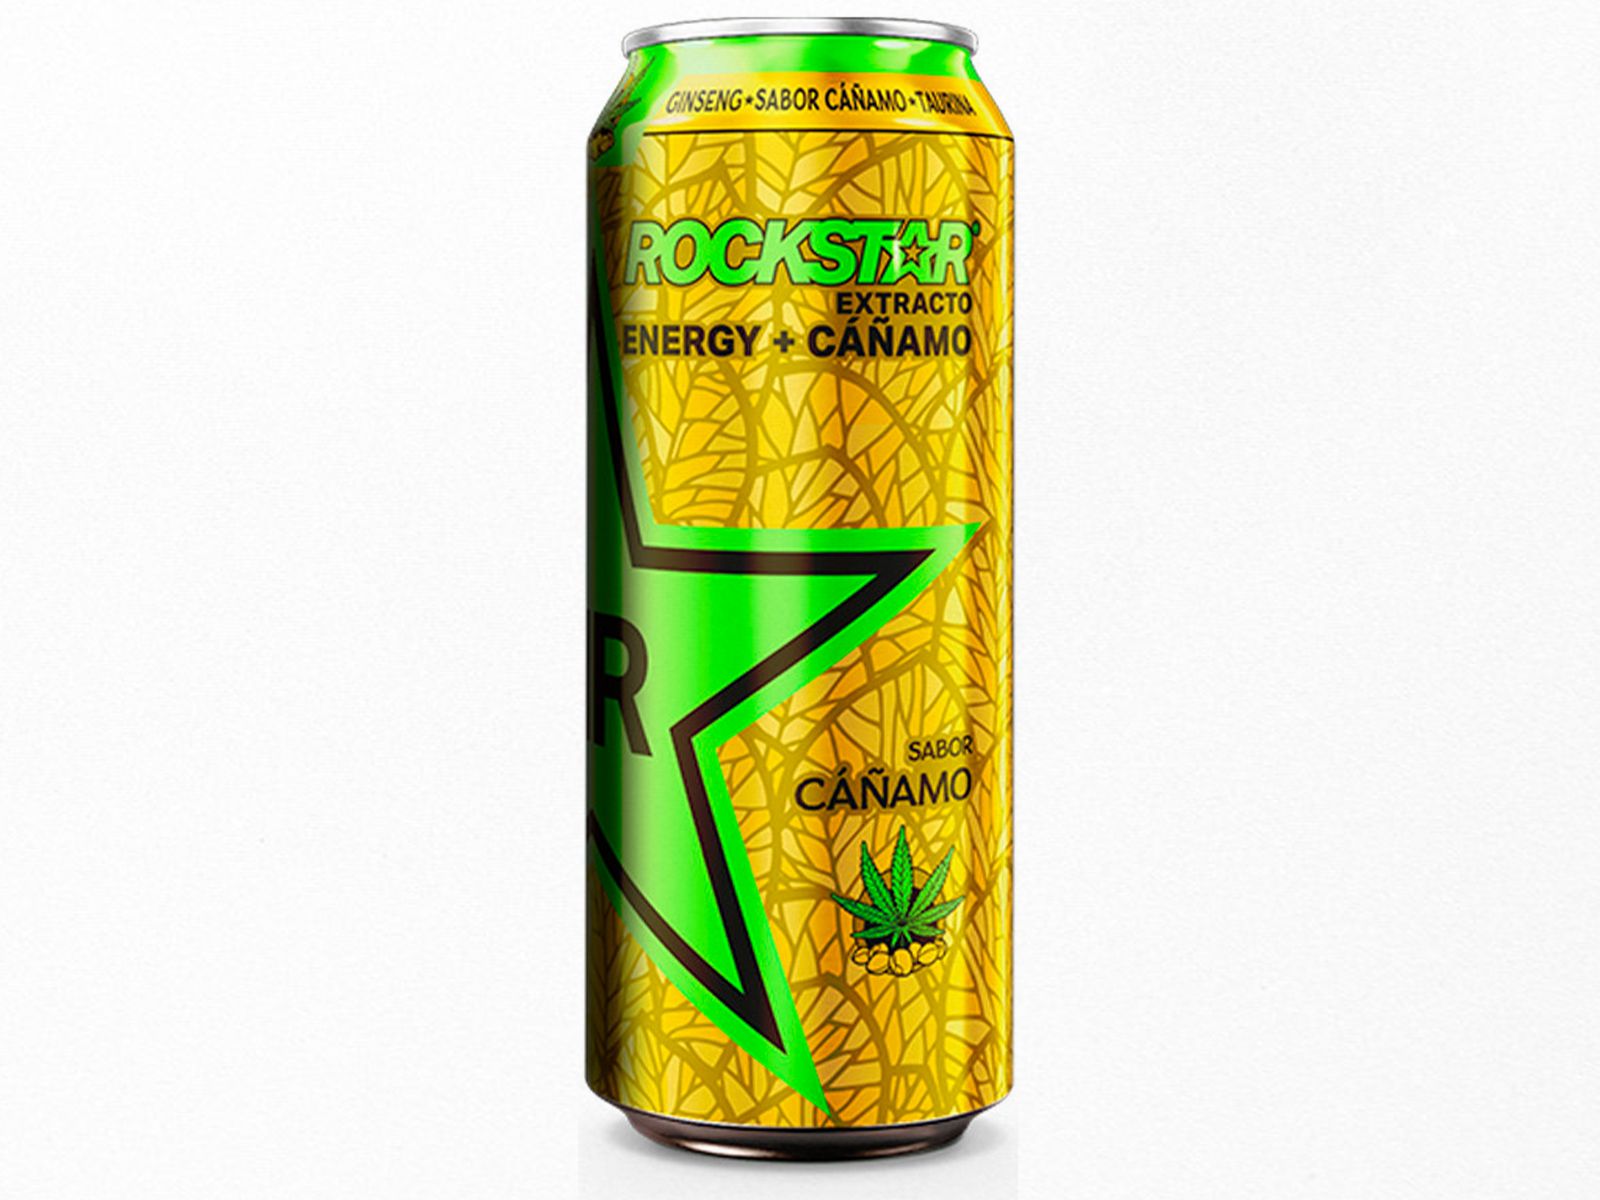 PepsiCo to launch hemp seed-infused drink under Rockstar Energy